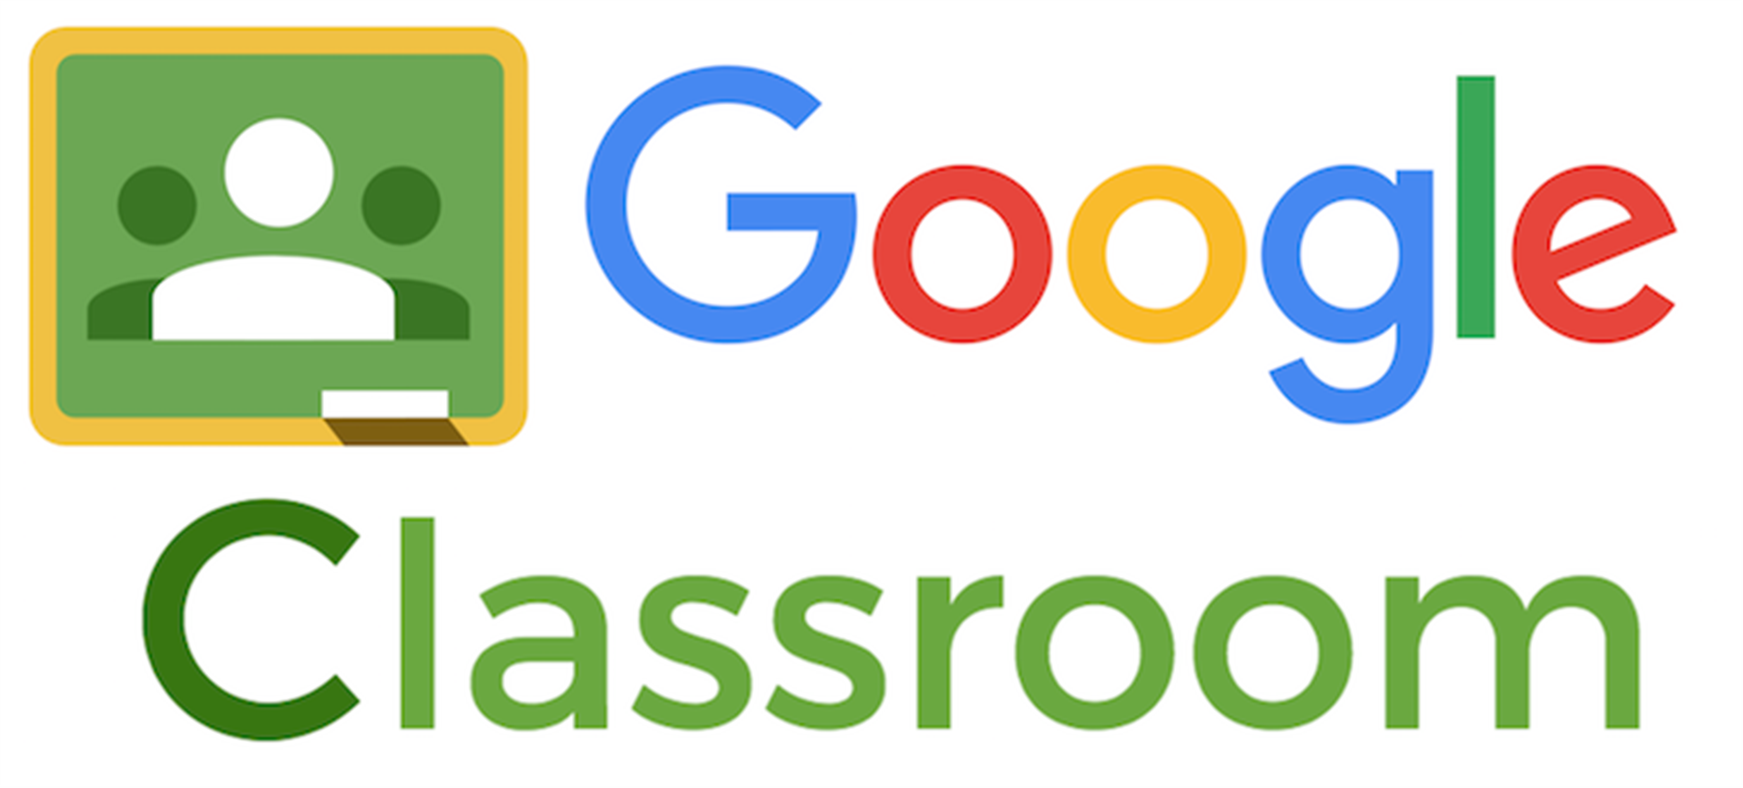 Https google класс. Google Classroom. Логотип гугл классрум. Google Classroom класс. Гугл класс картинка.